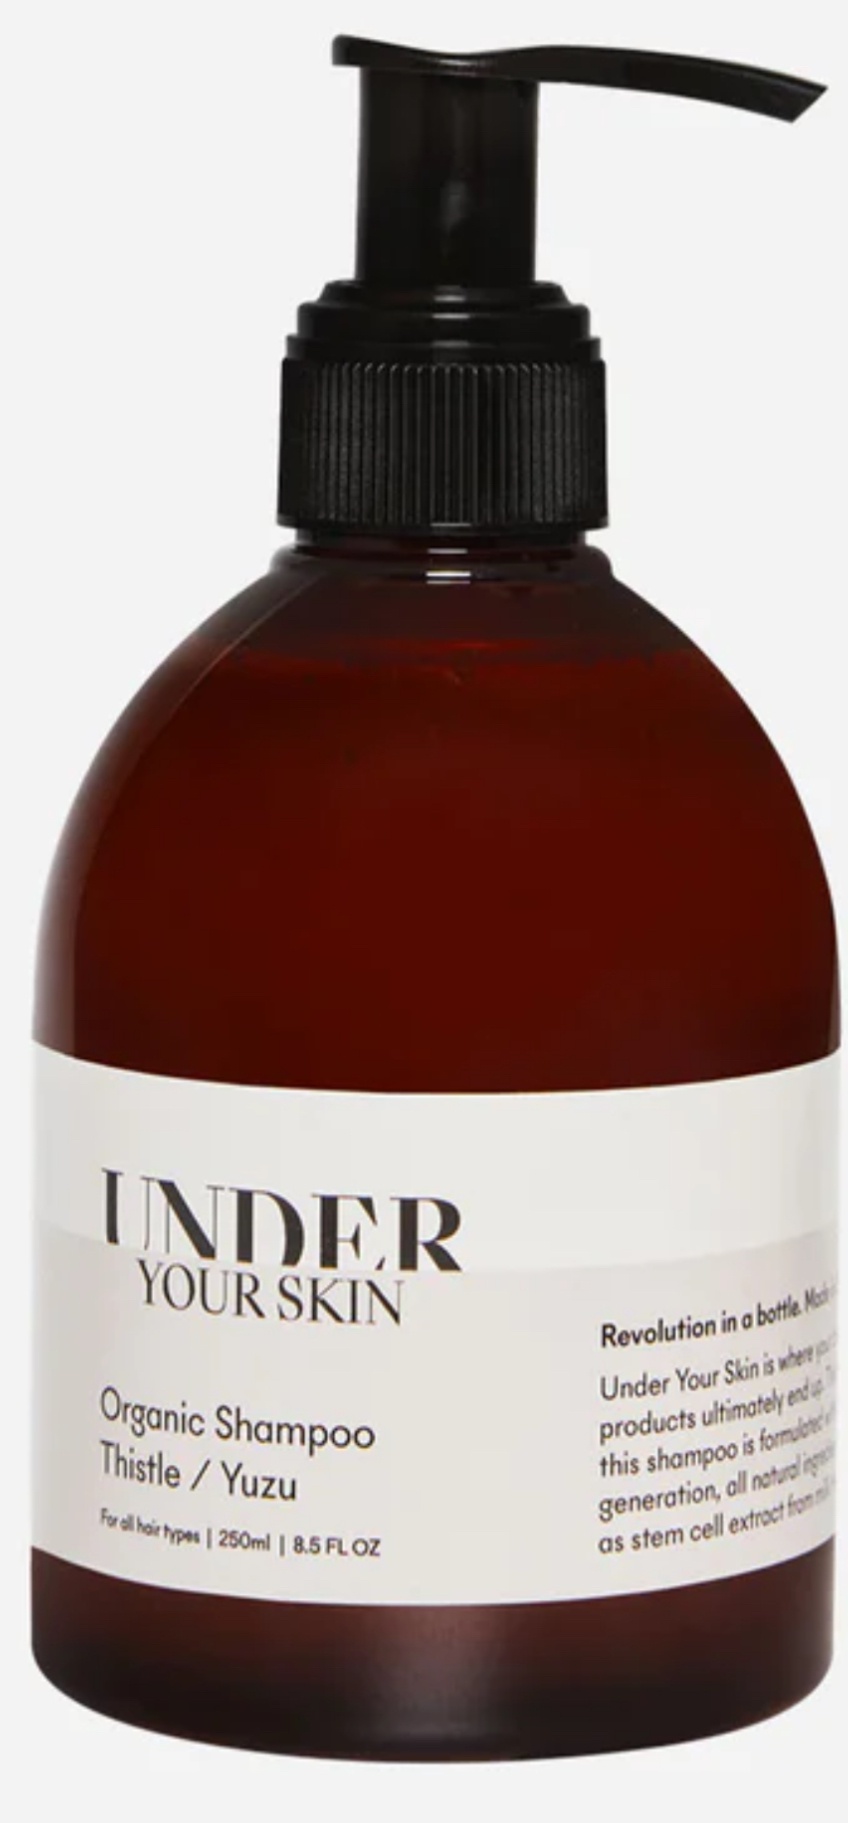 Under Your Skin Organic Shampoo Thistle/Yuzu